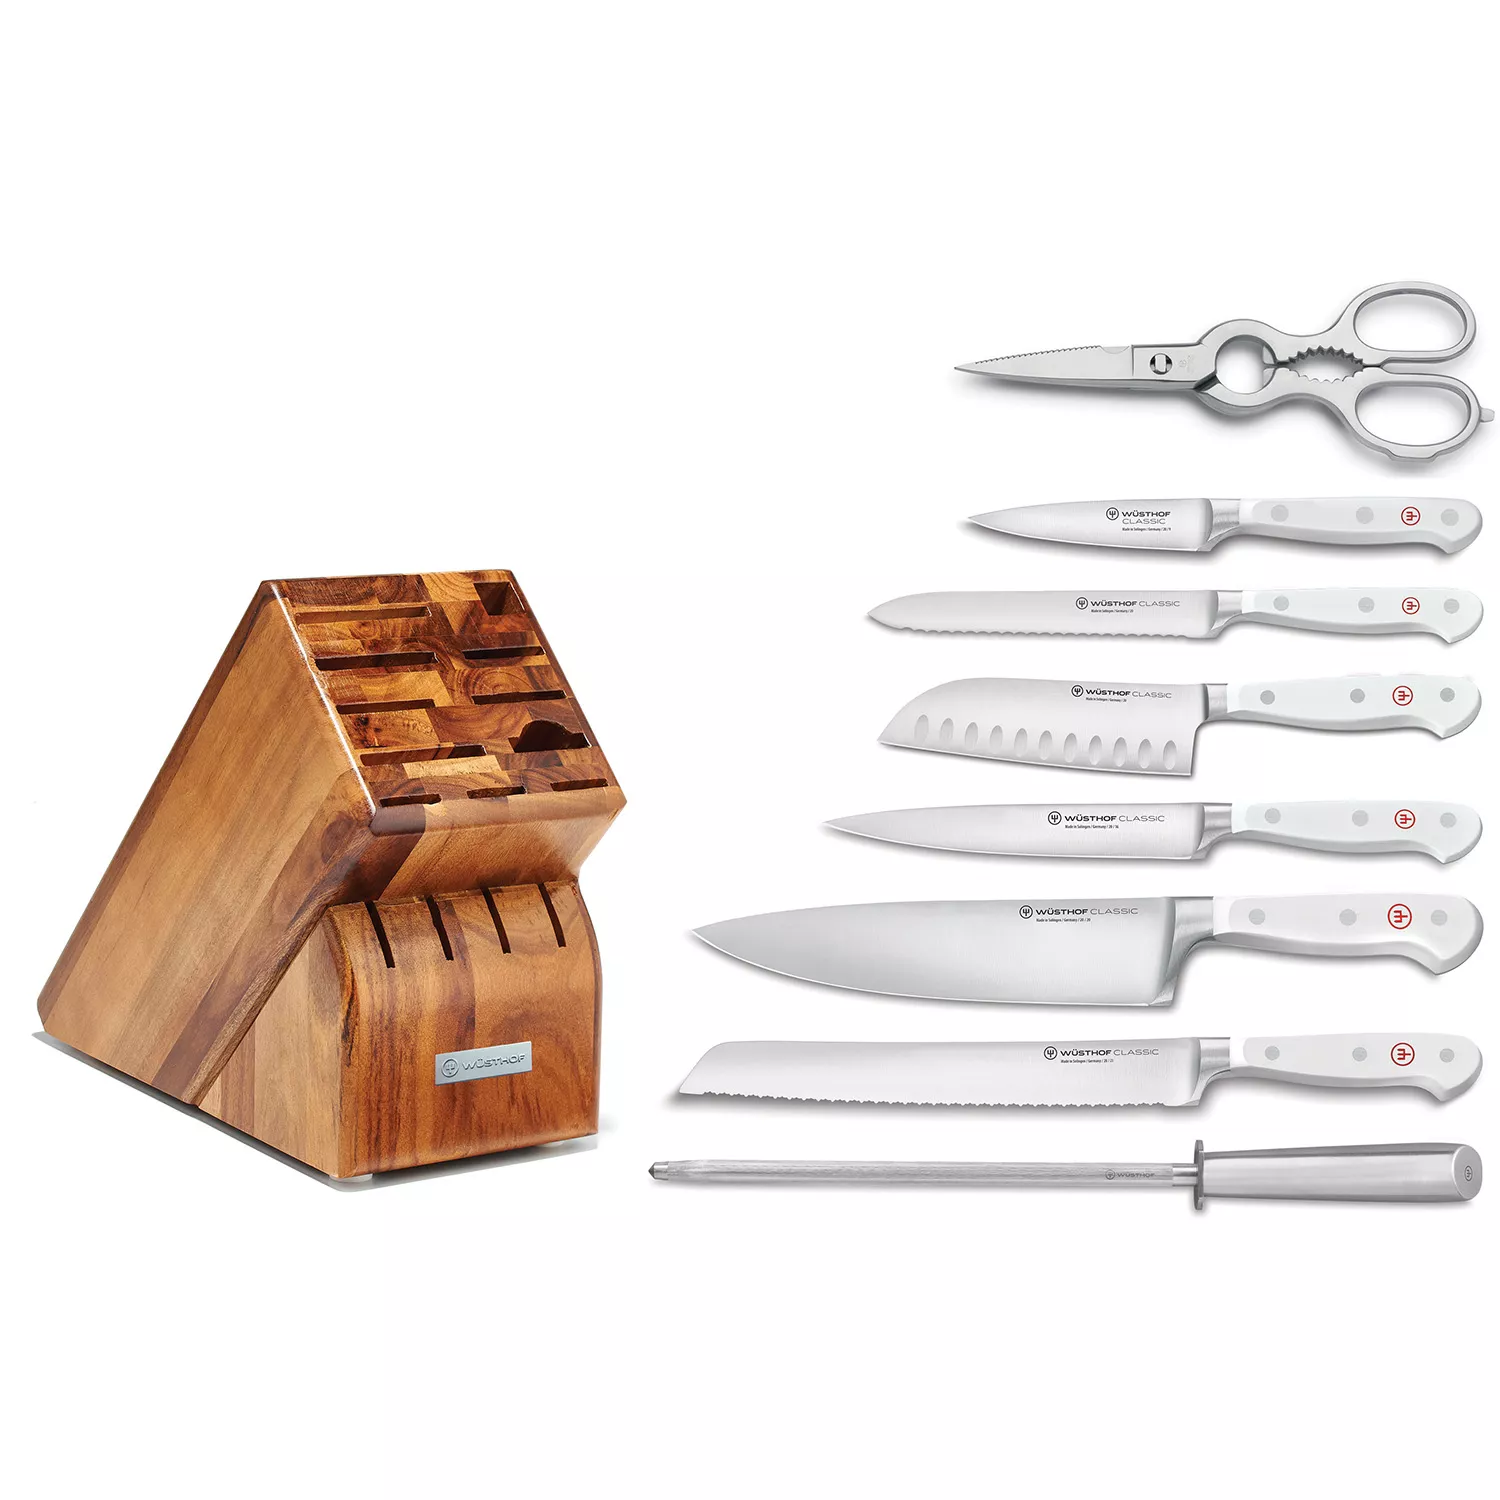 Wusthof Classic Steak Knife Set with Wood Case (8 Piece)